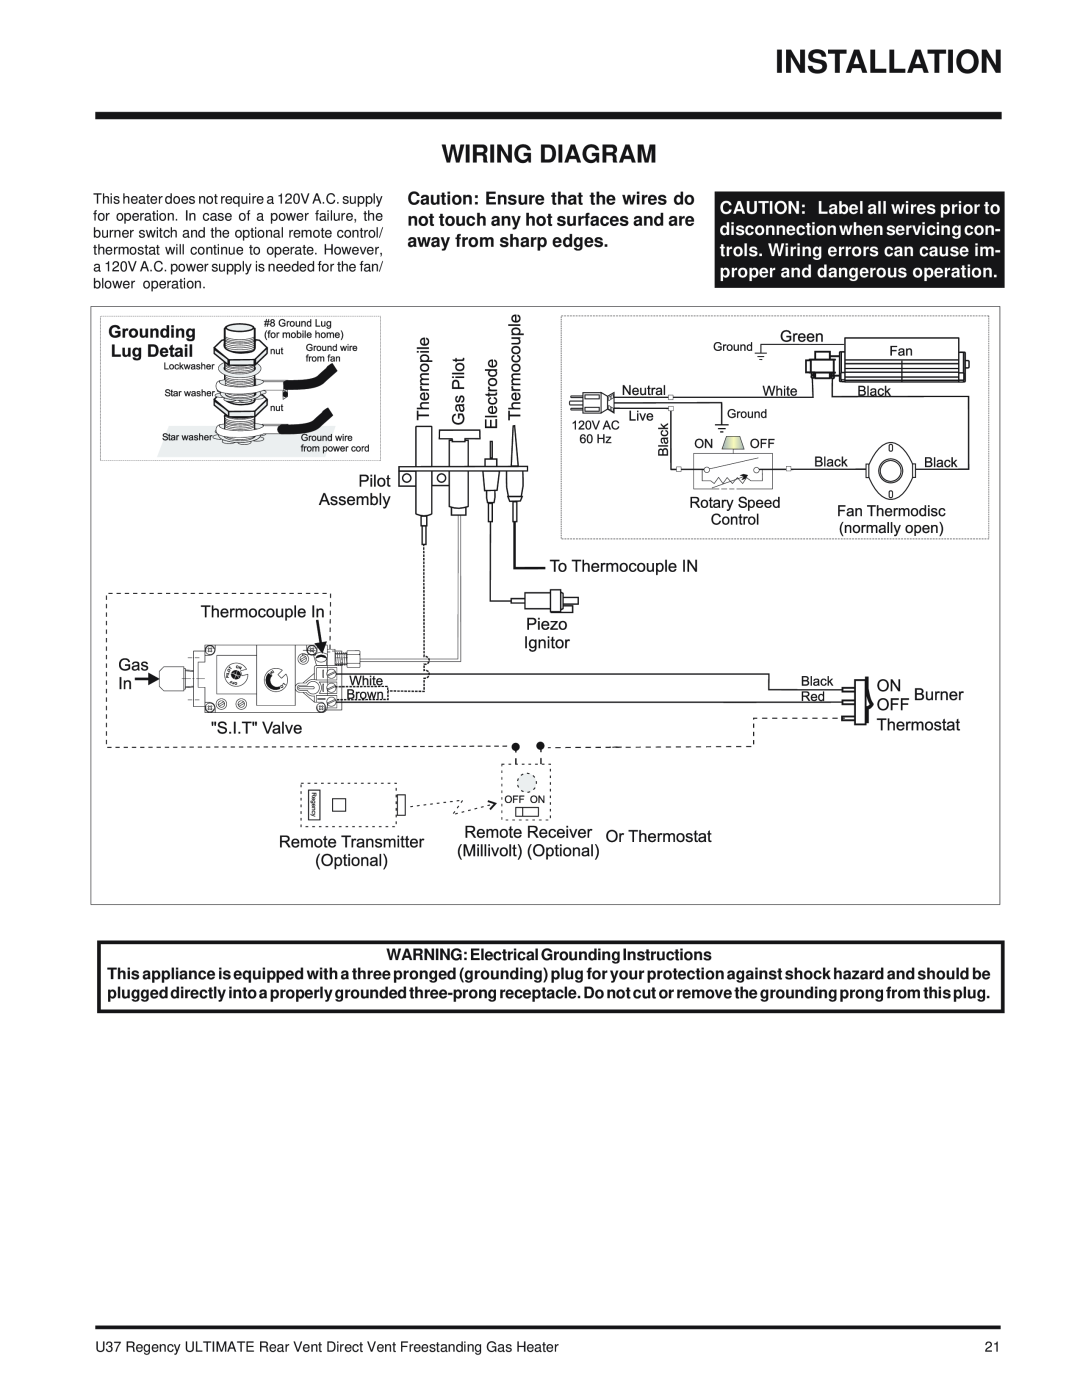 Regency U37-NG NATURAL GAS, U37-LP PROPANE Installation, Wiring Diagram, WARNING Electrical Grounding Instructions 